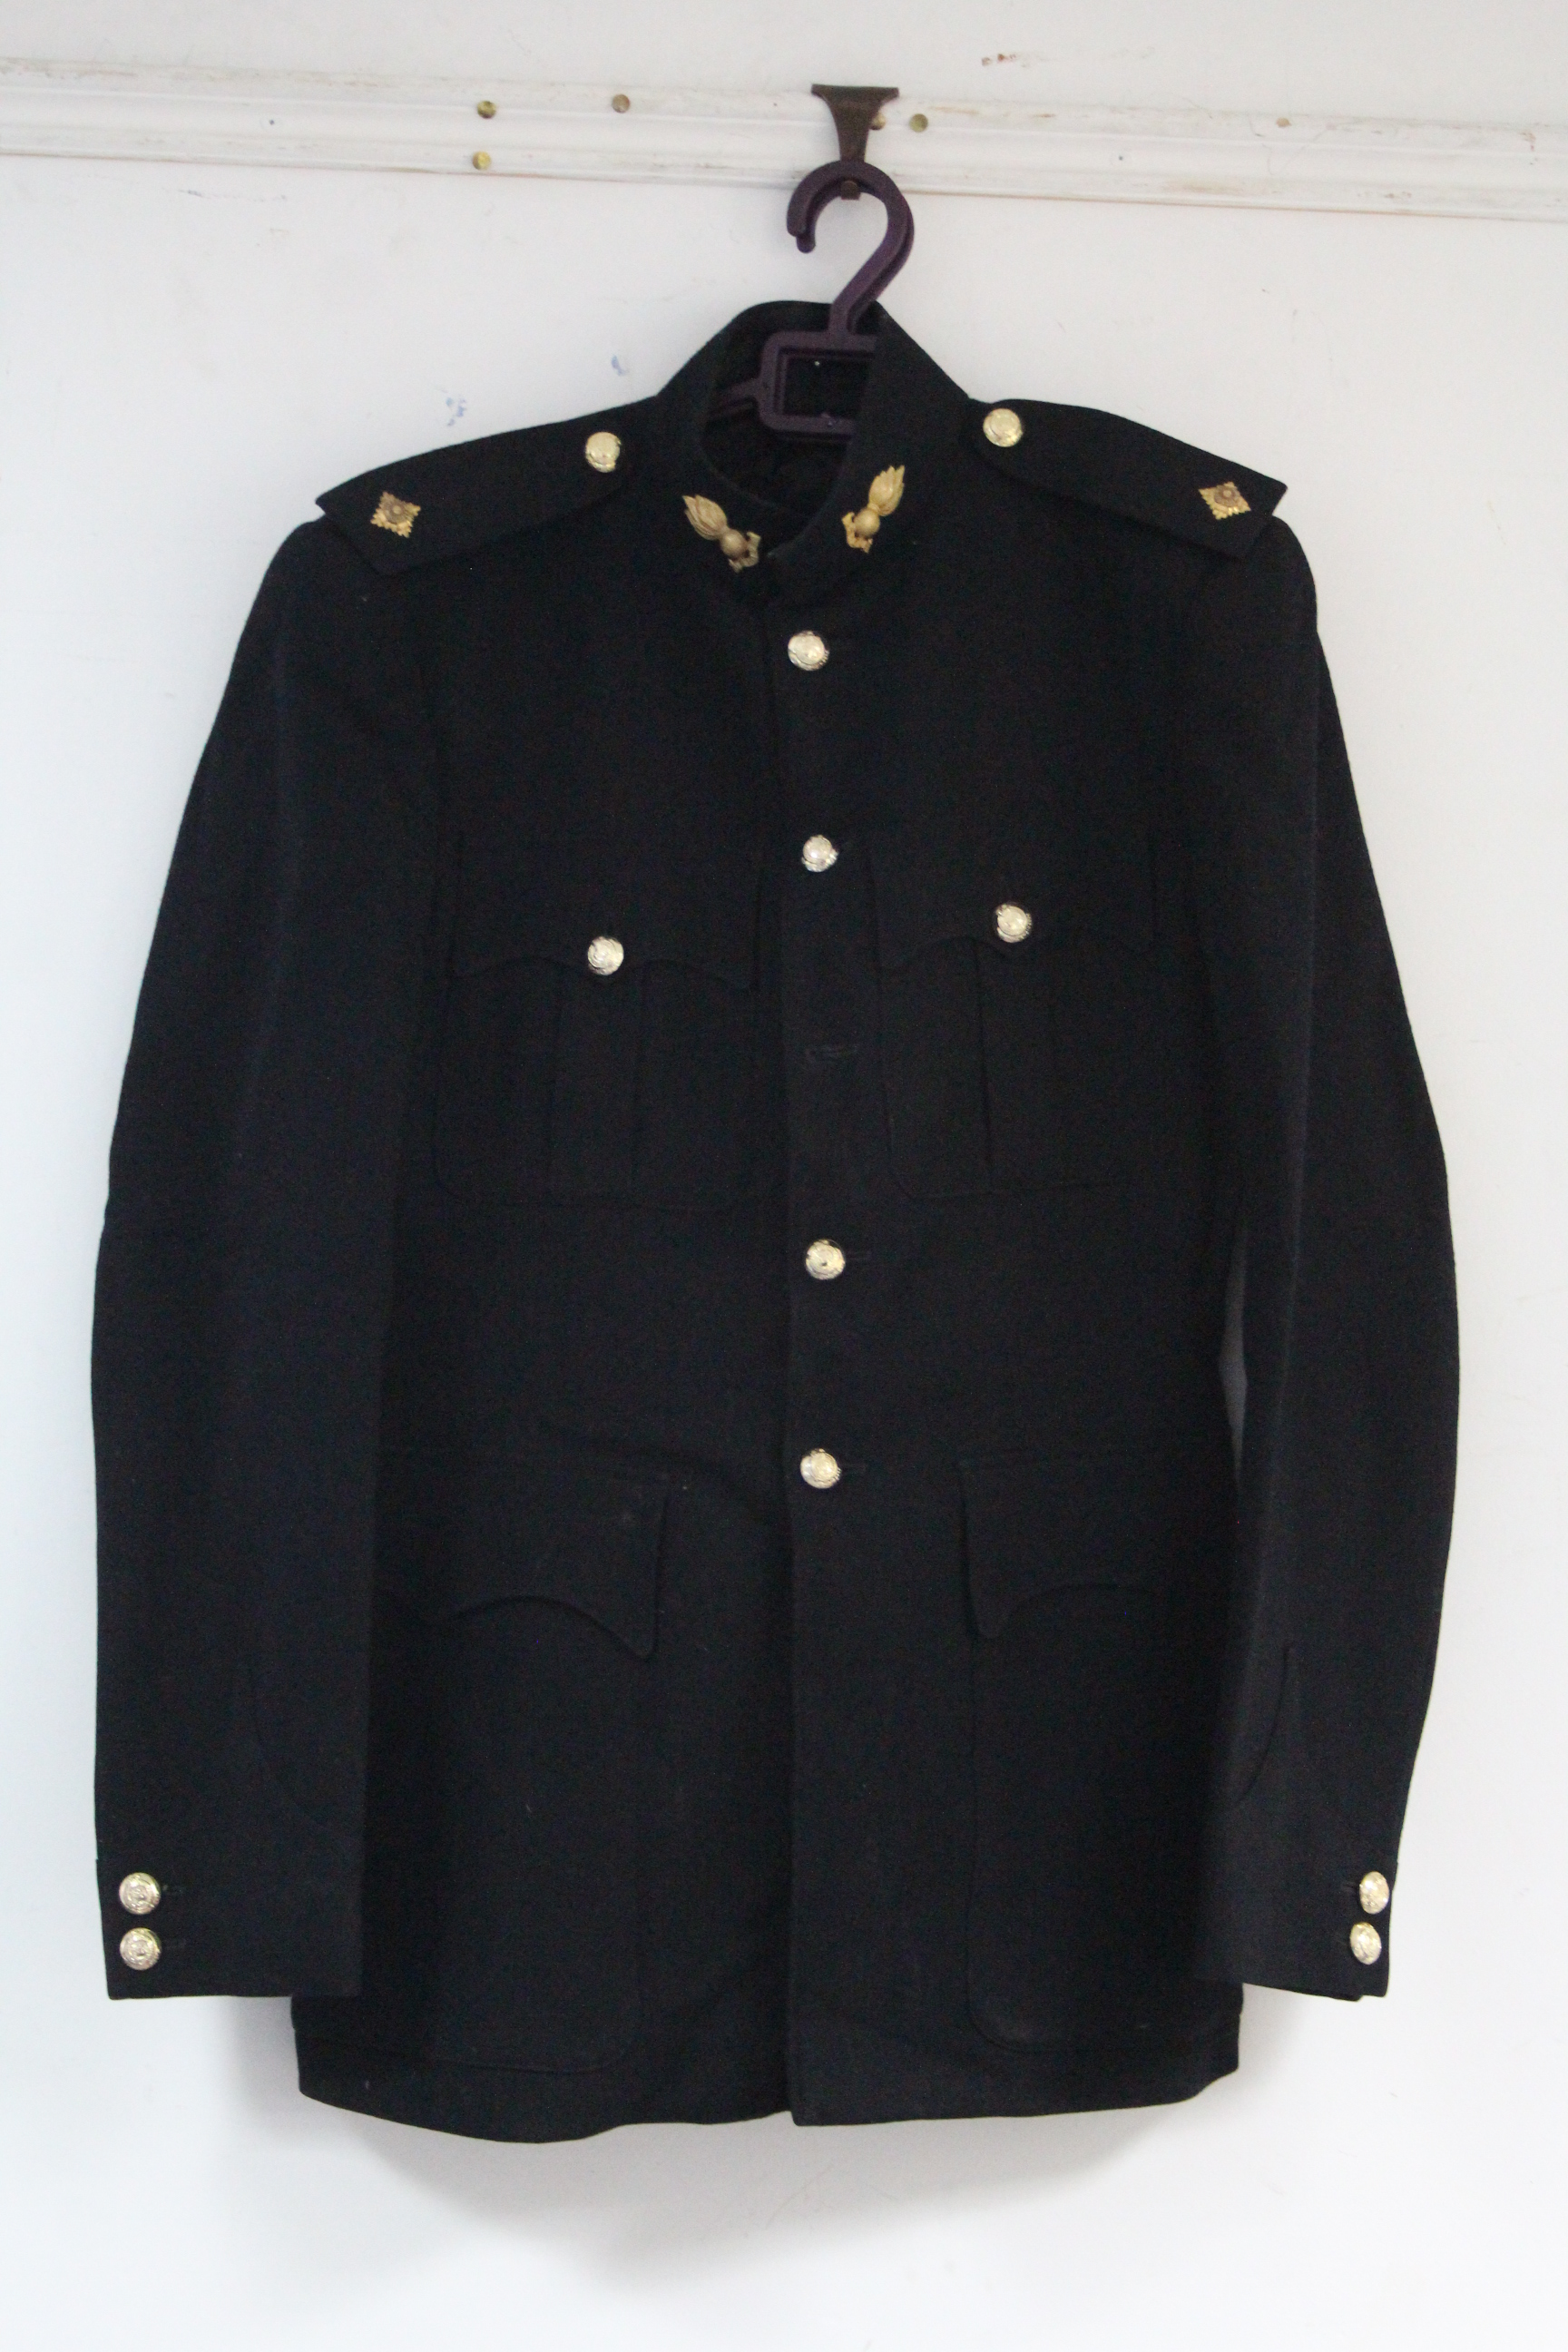 A Royal Engineers dress uniform. - Image 4 of 7